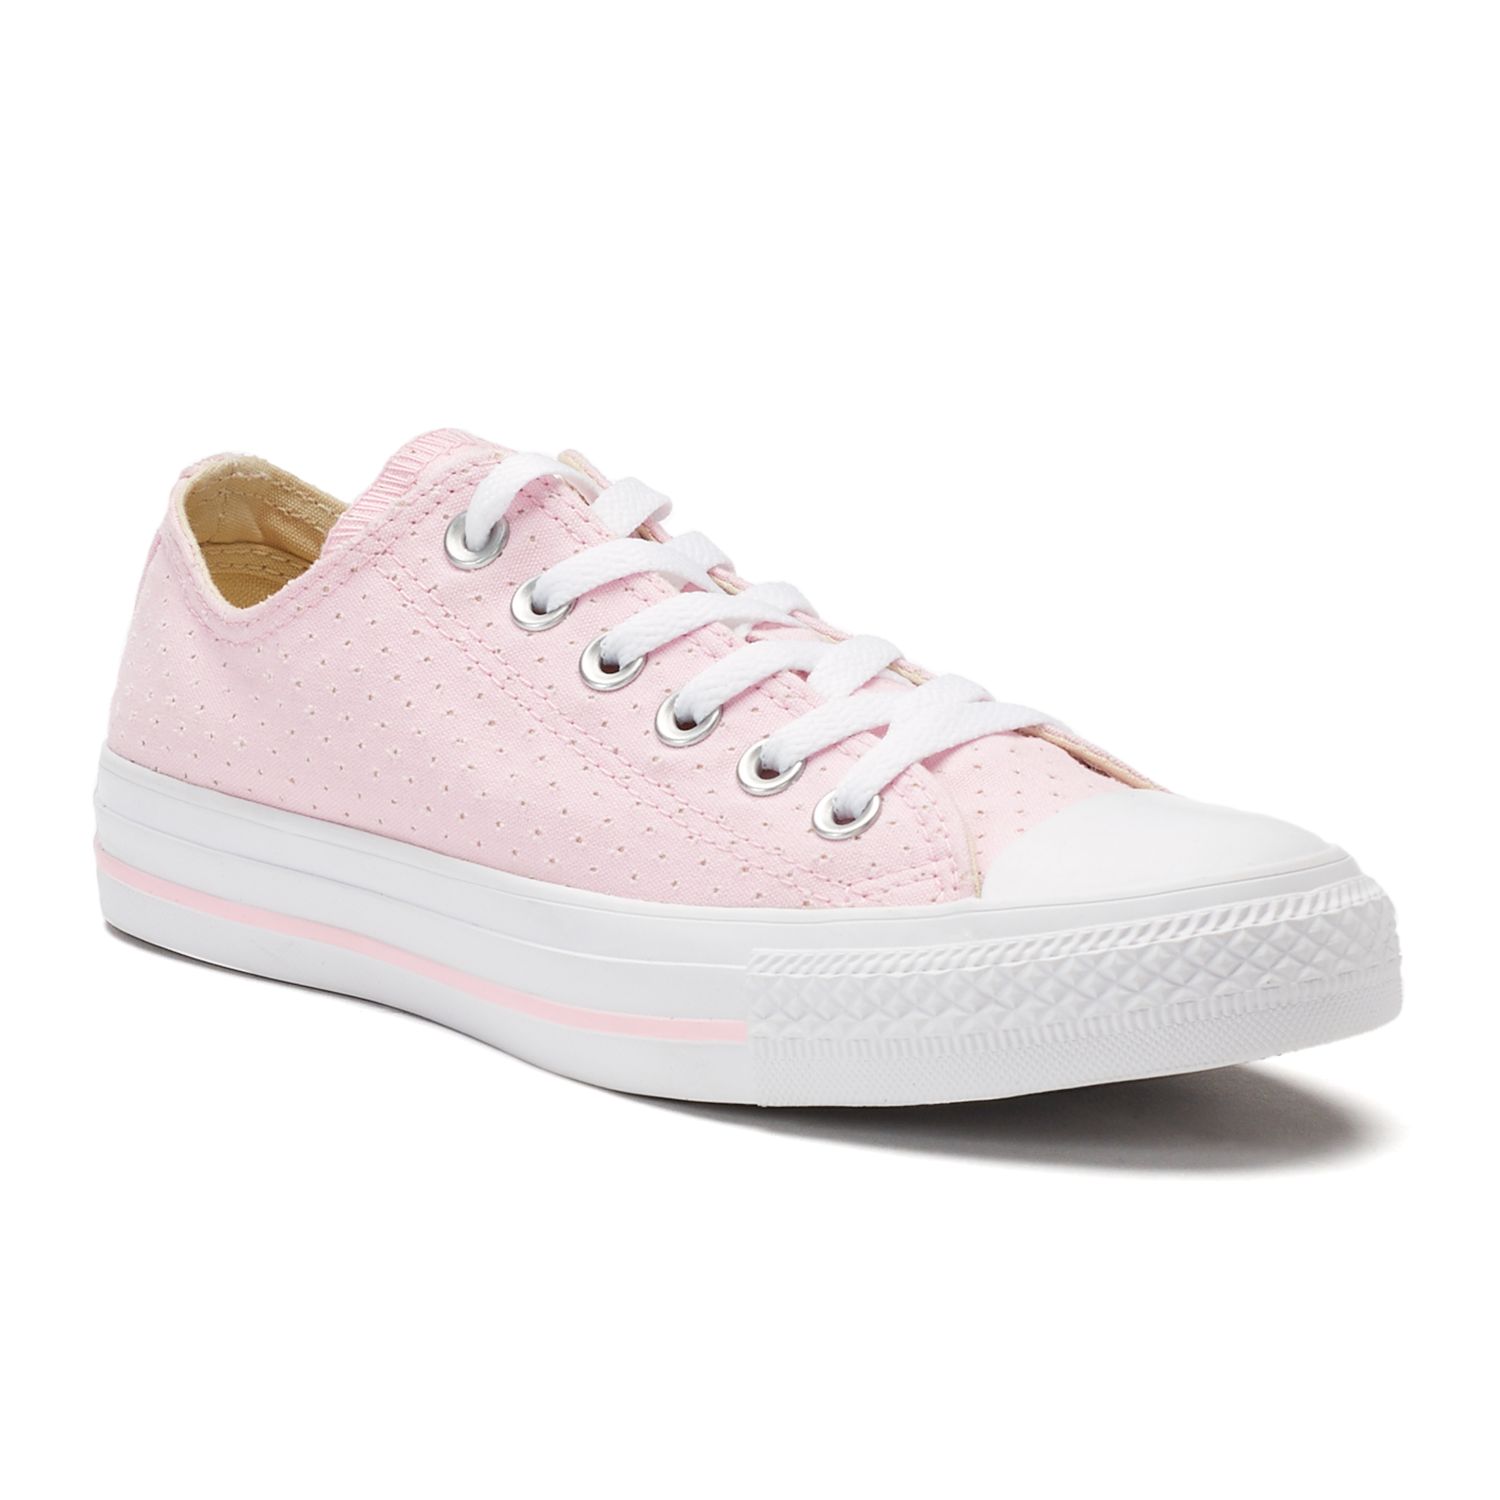 pink converse sneakers